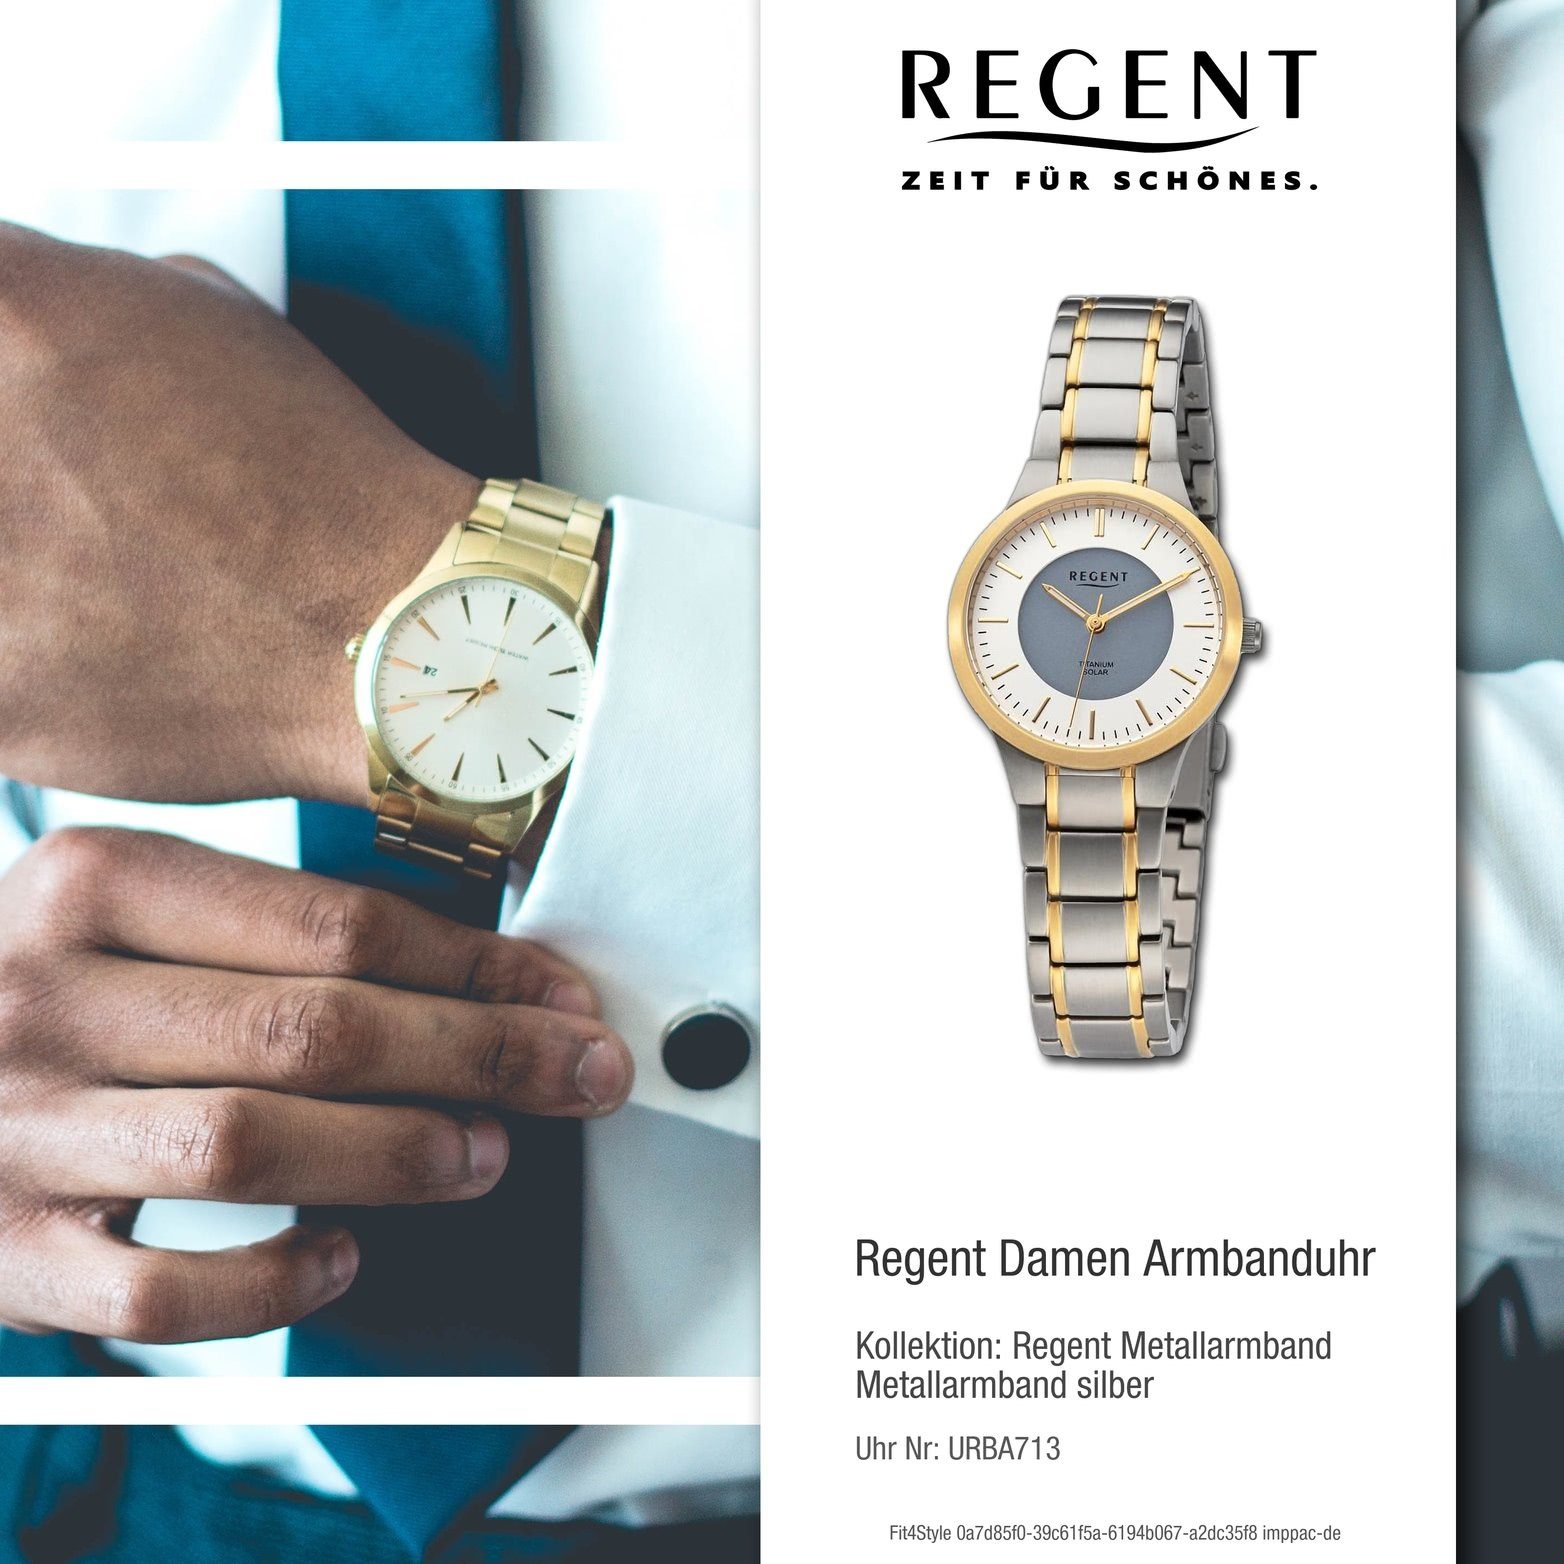 Regent rundes Damenuhr Gehäuse, Quarzuhr Damen Analog, silber, (ca. Regent 30mm) Armbanduhr Metallarmband gold, groß